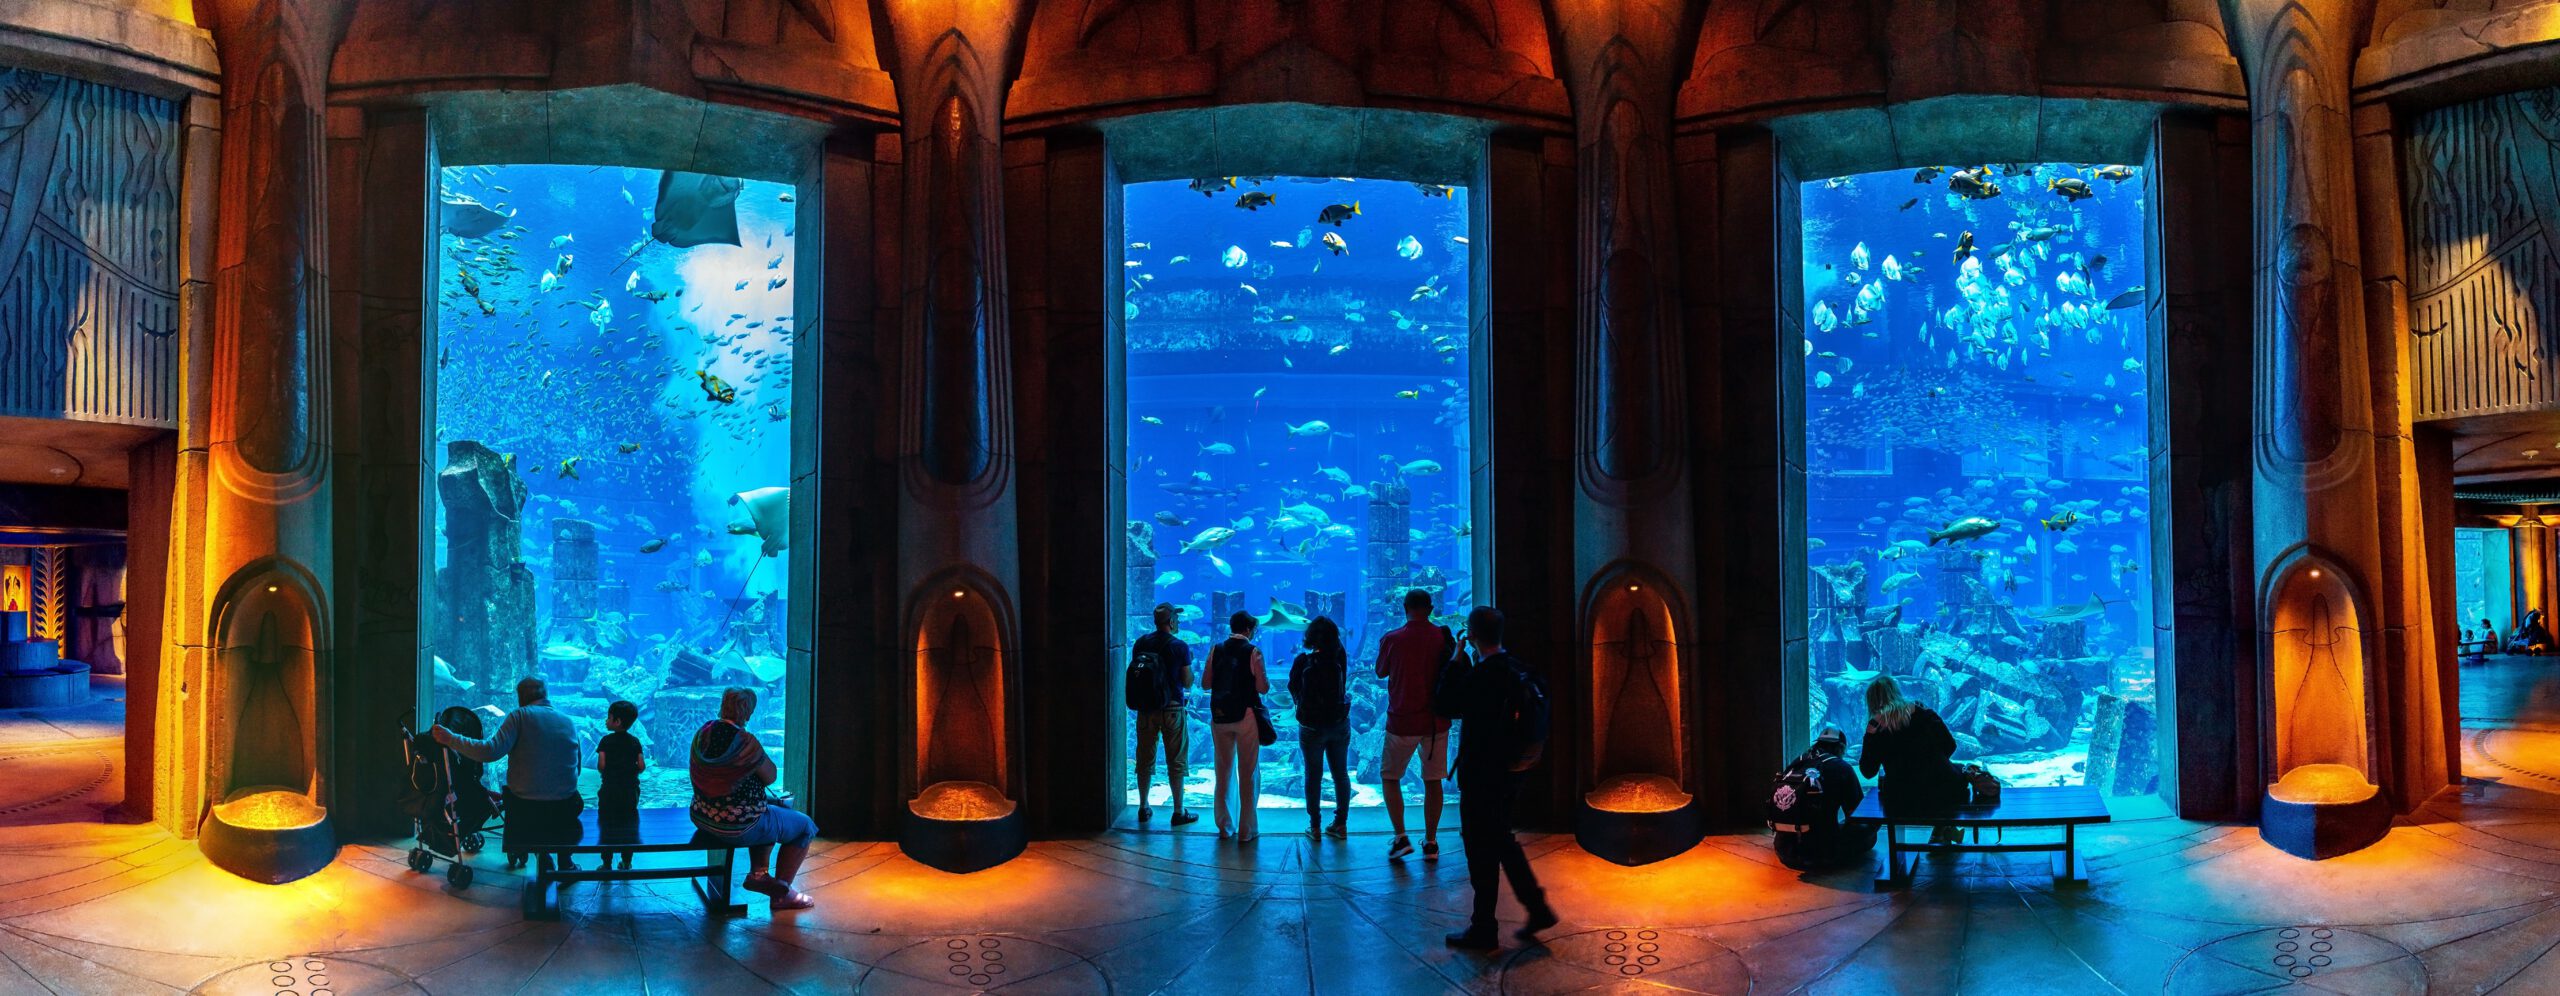 Lost Chambers Aquarium in Dubai - Fish tank